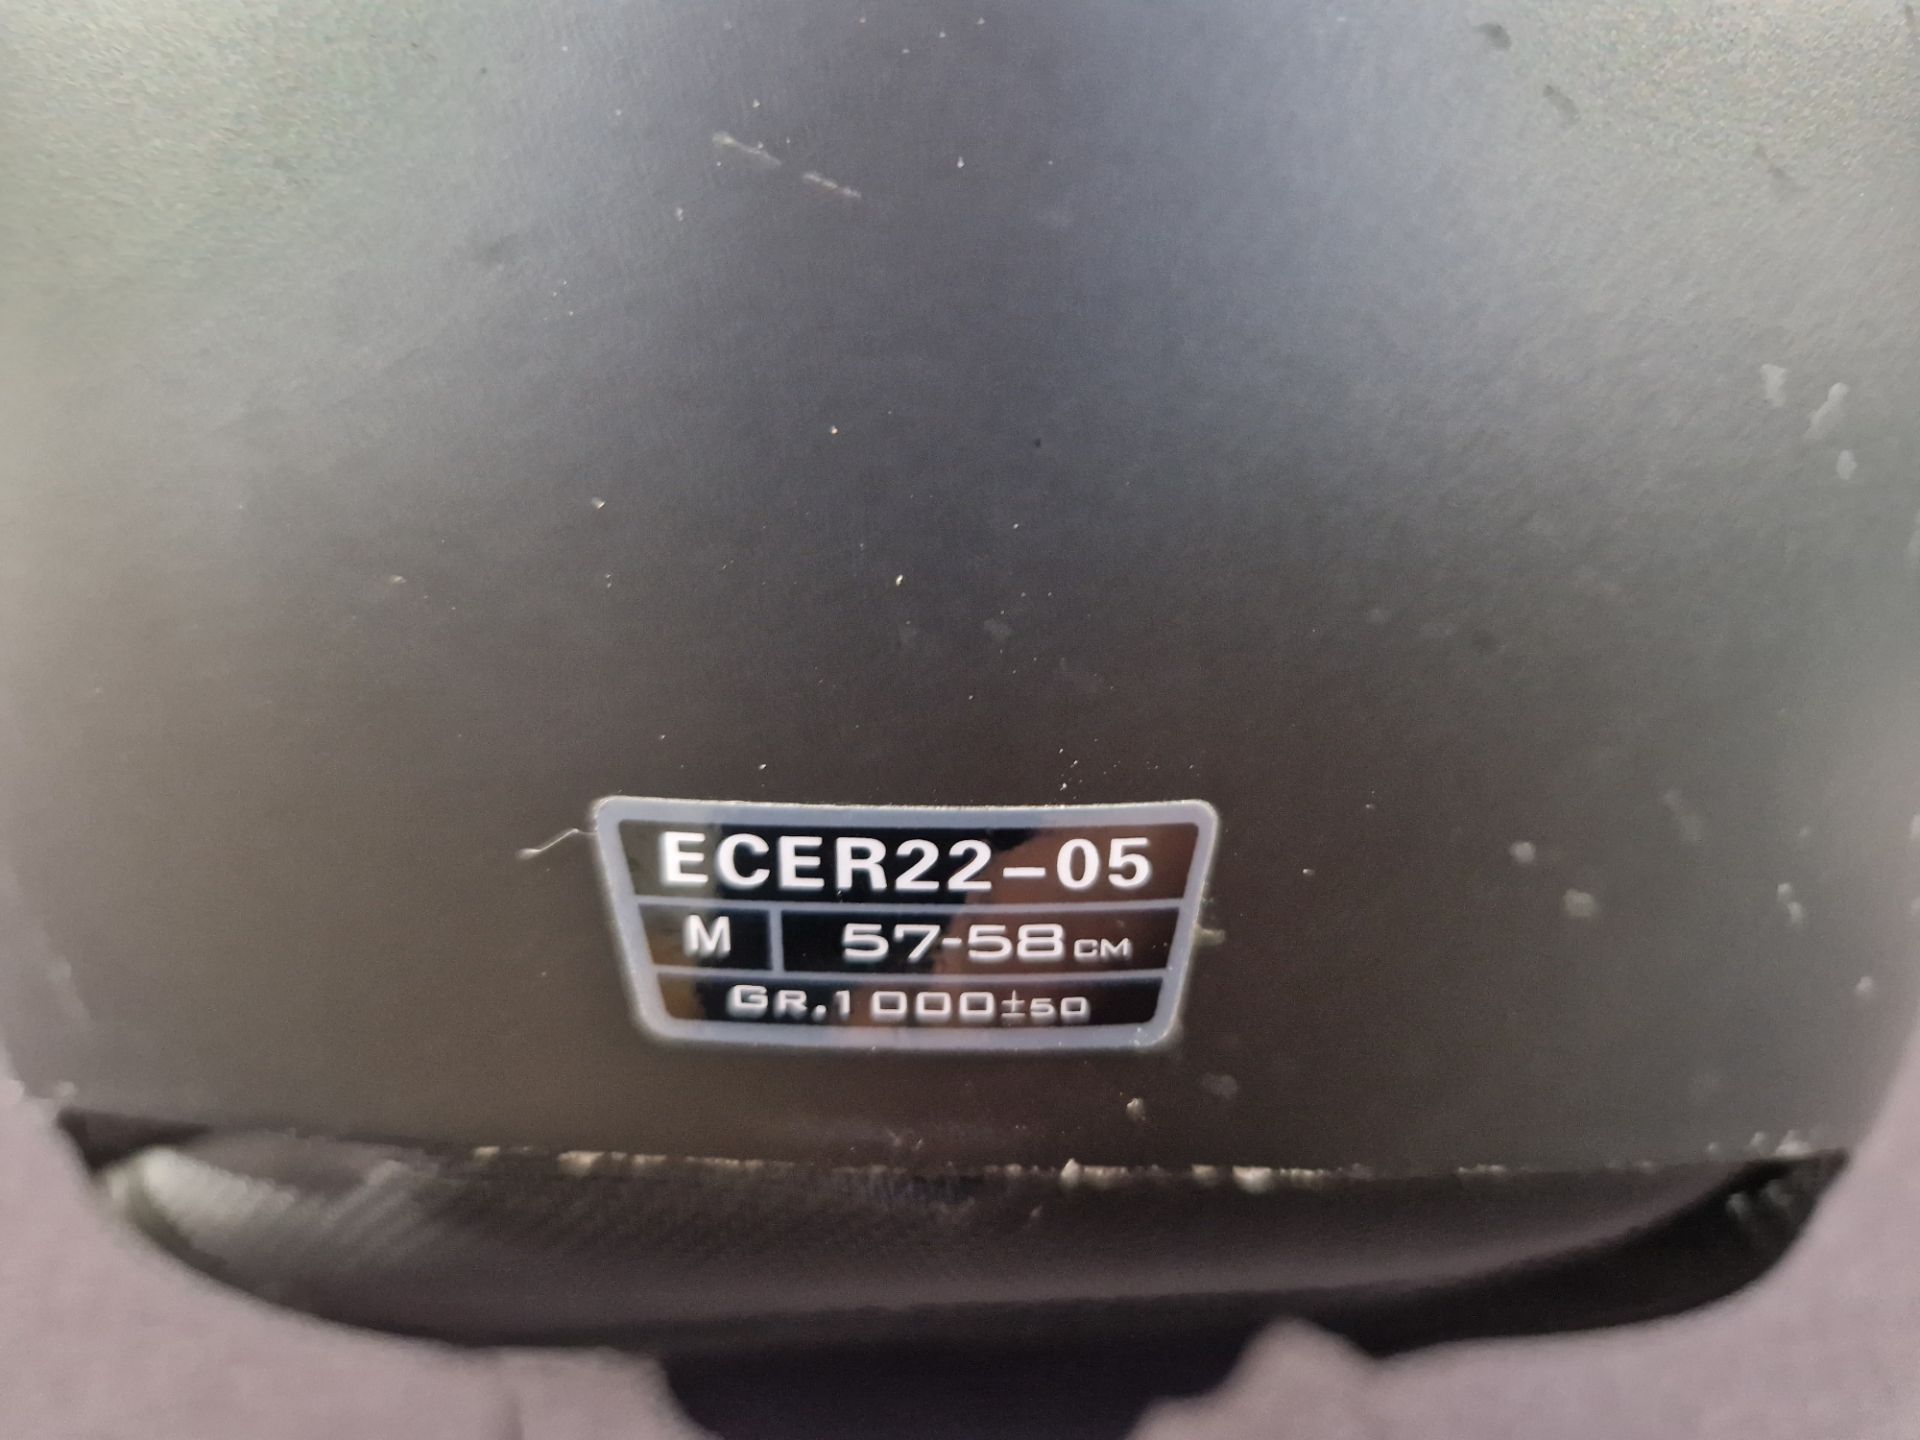 A SPADA Open Face Helmet with Drop Down Visor, Size M (57-58cm), ECE R22-5 - Image 2 of 2